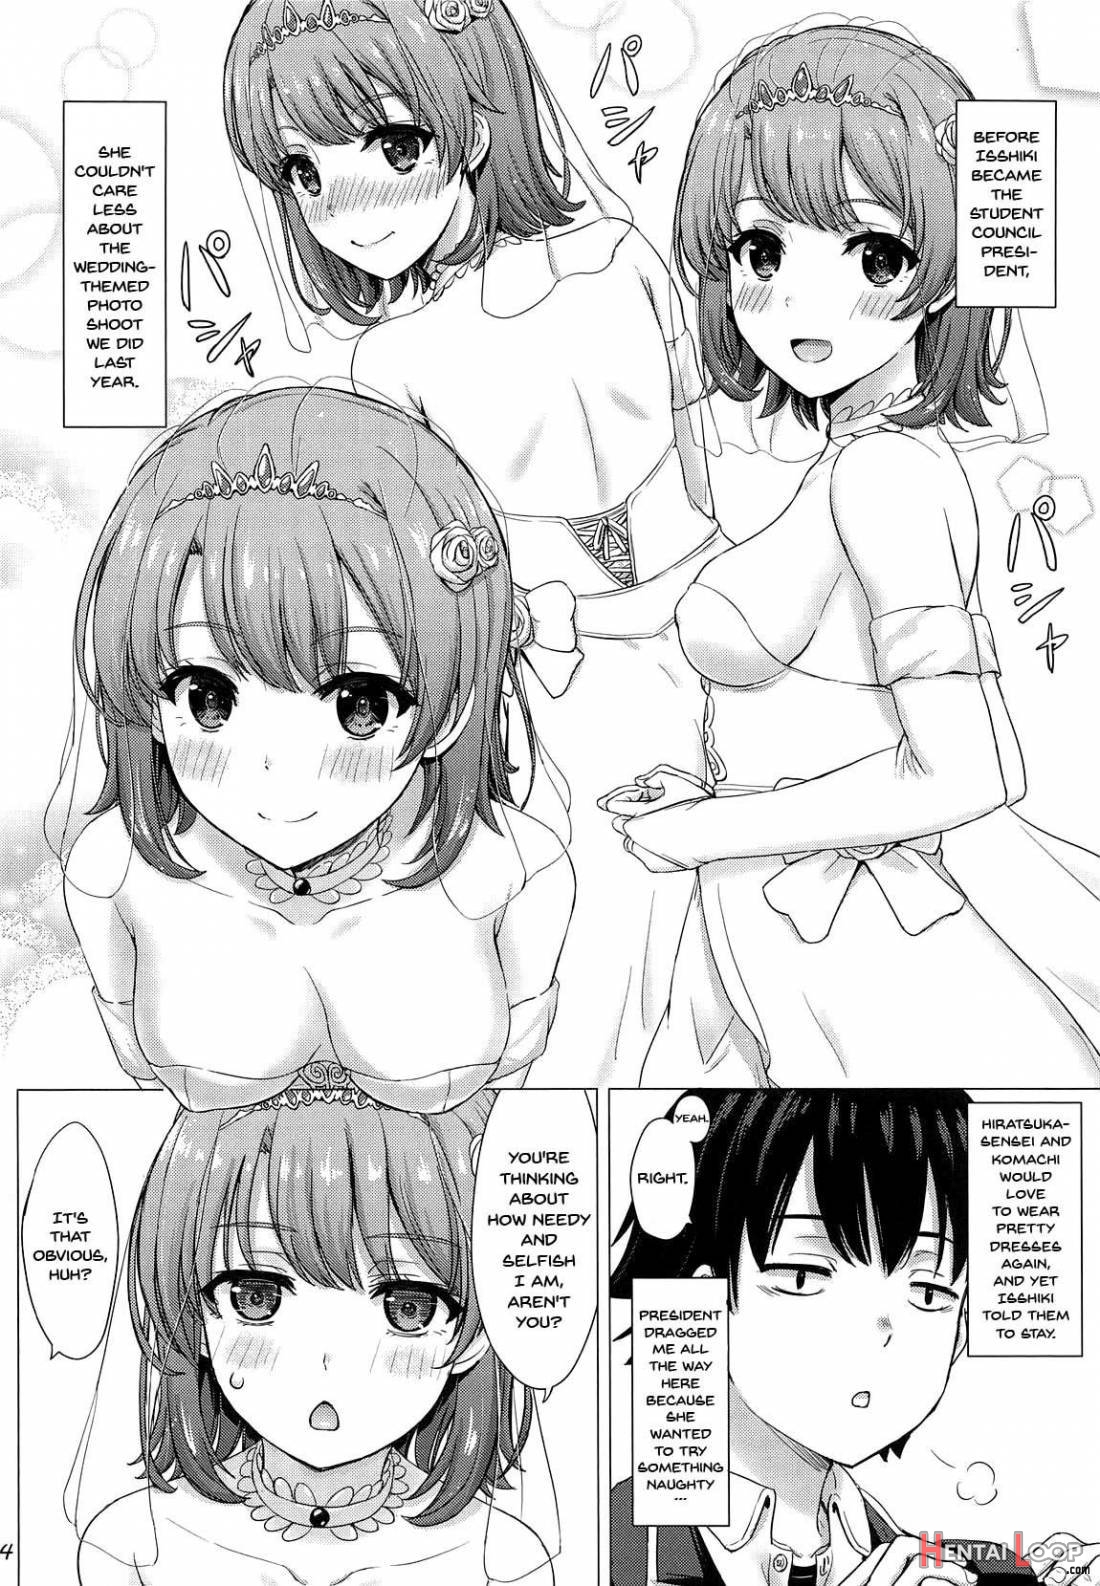 Wedding Irohasu! – Iroha’s Gonna Marry You After Today’s Scholl! page 3